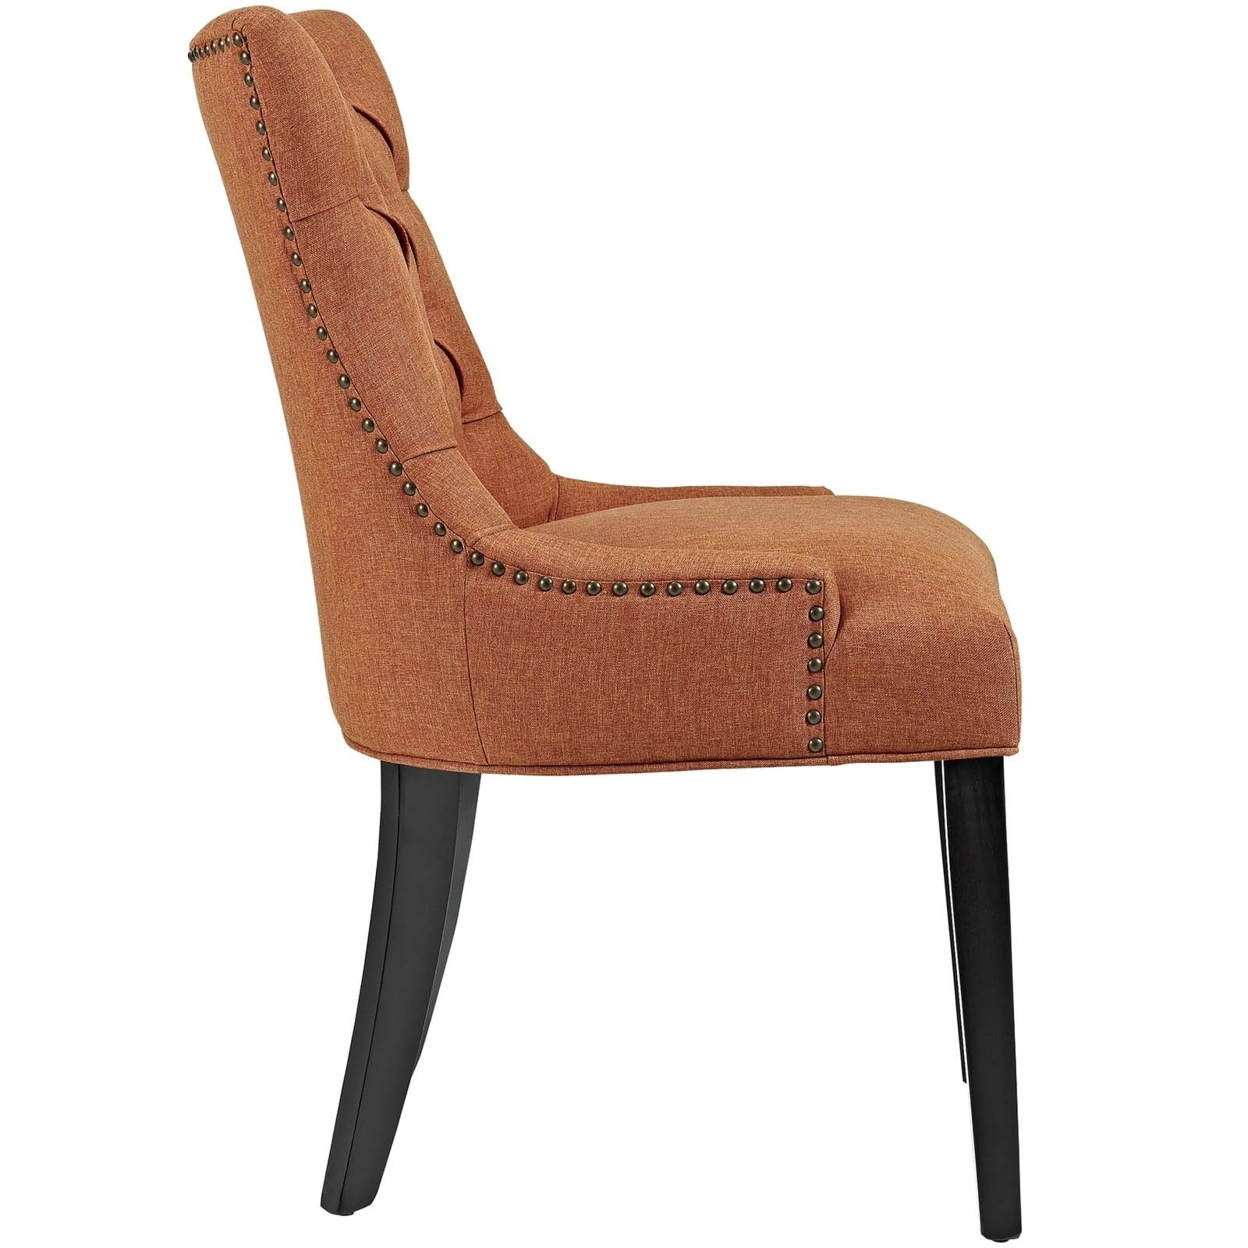 Regent Dining Side Chair Fabric Set Of 2, Orange